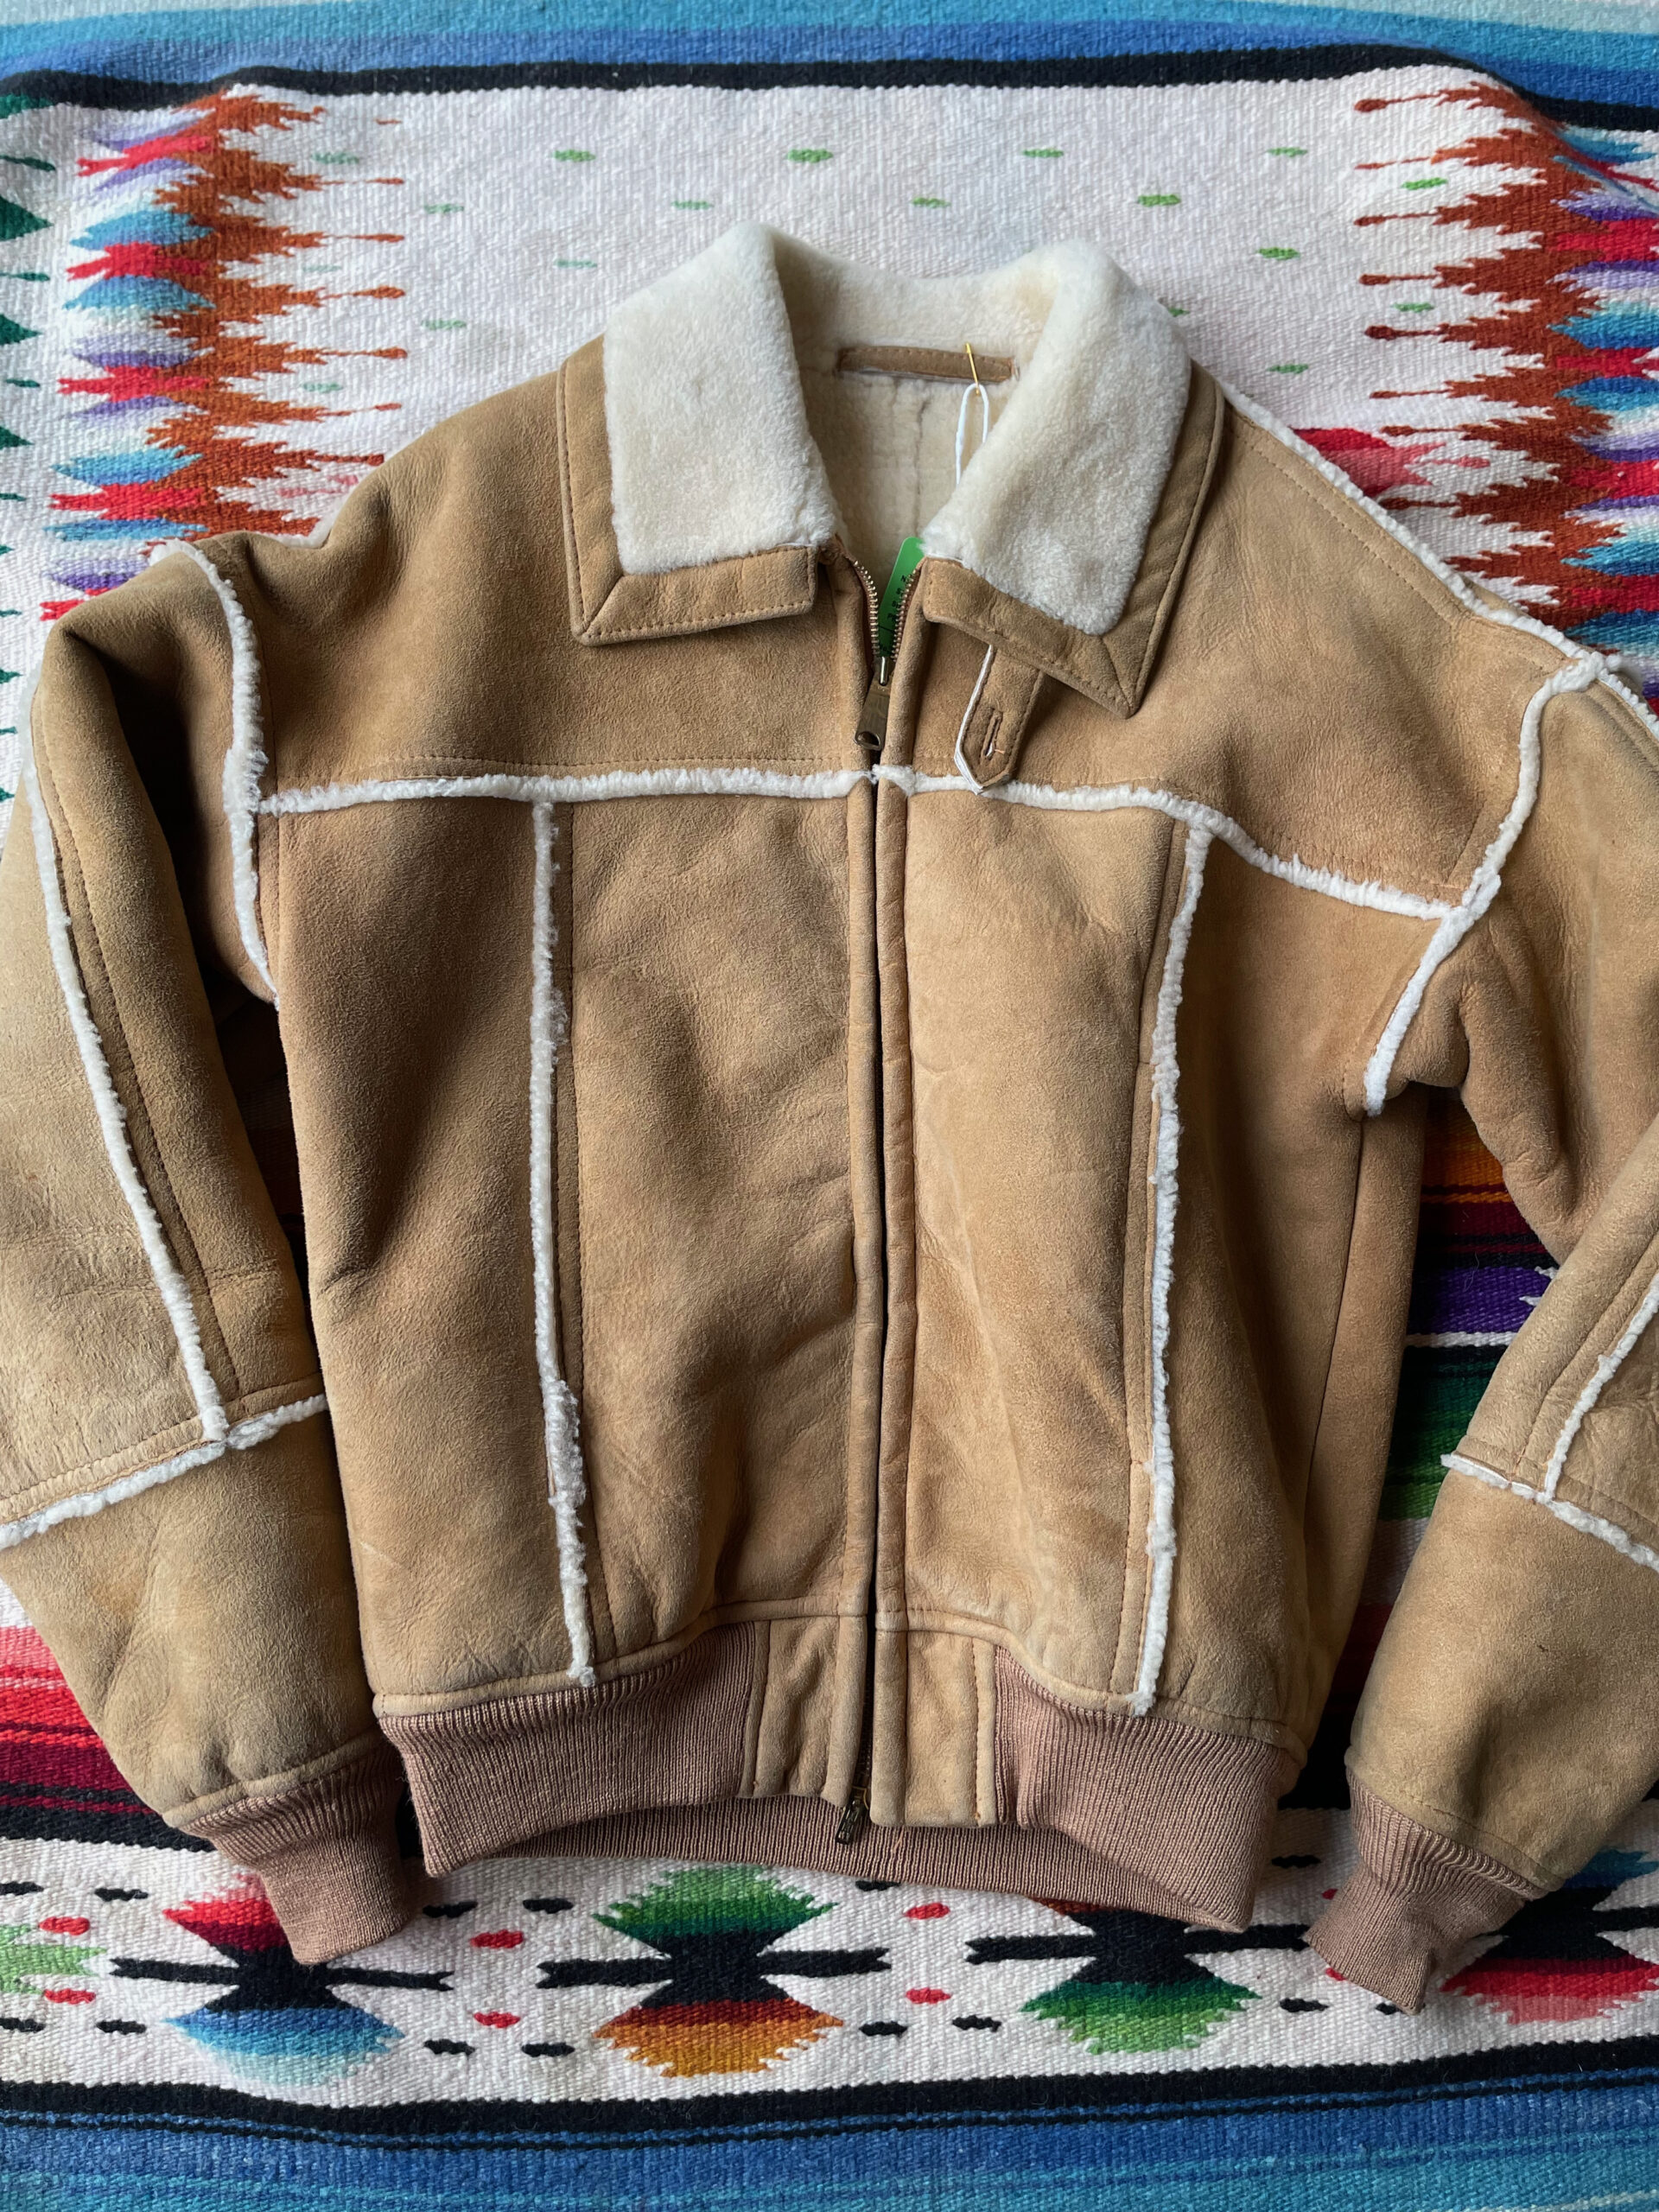 vintage mouton jacket